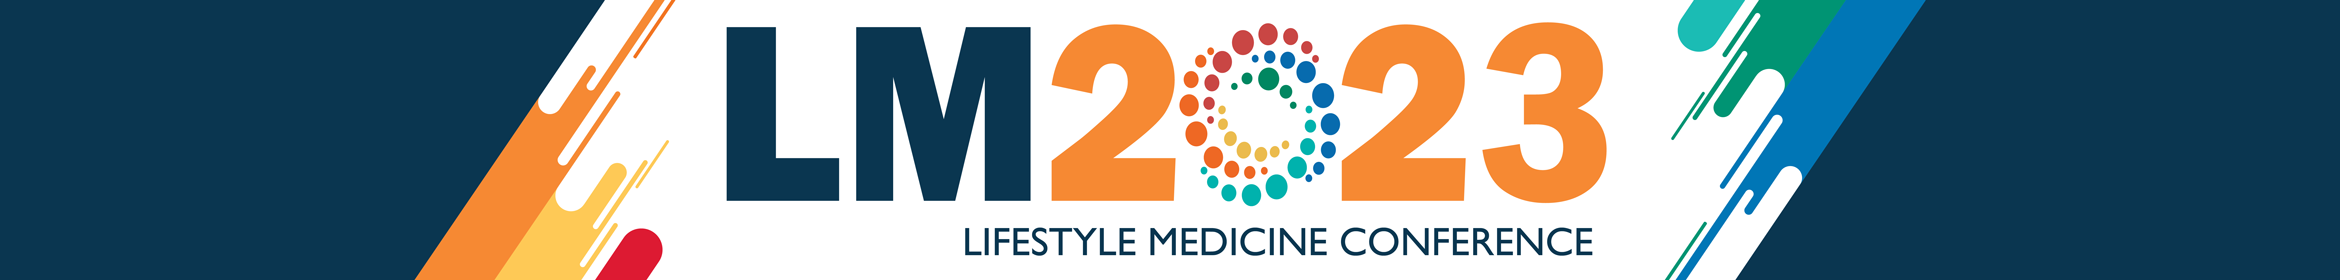 Lifestyle Medicine 2023 Main banner